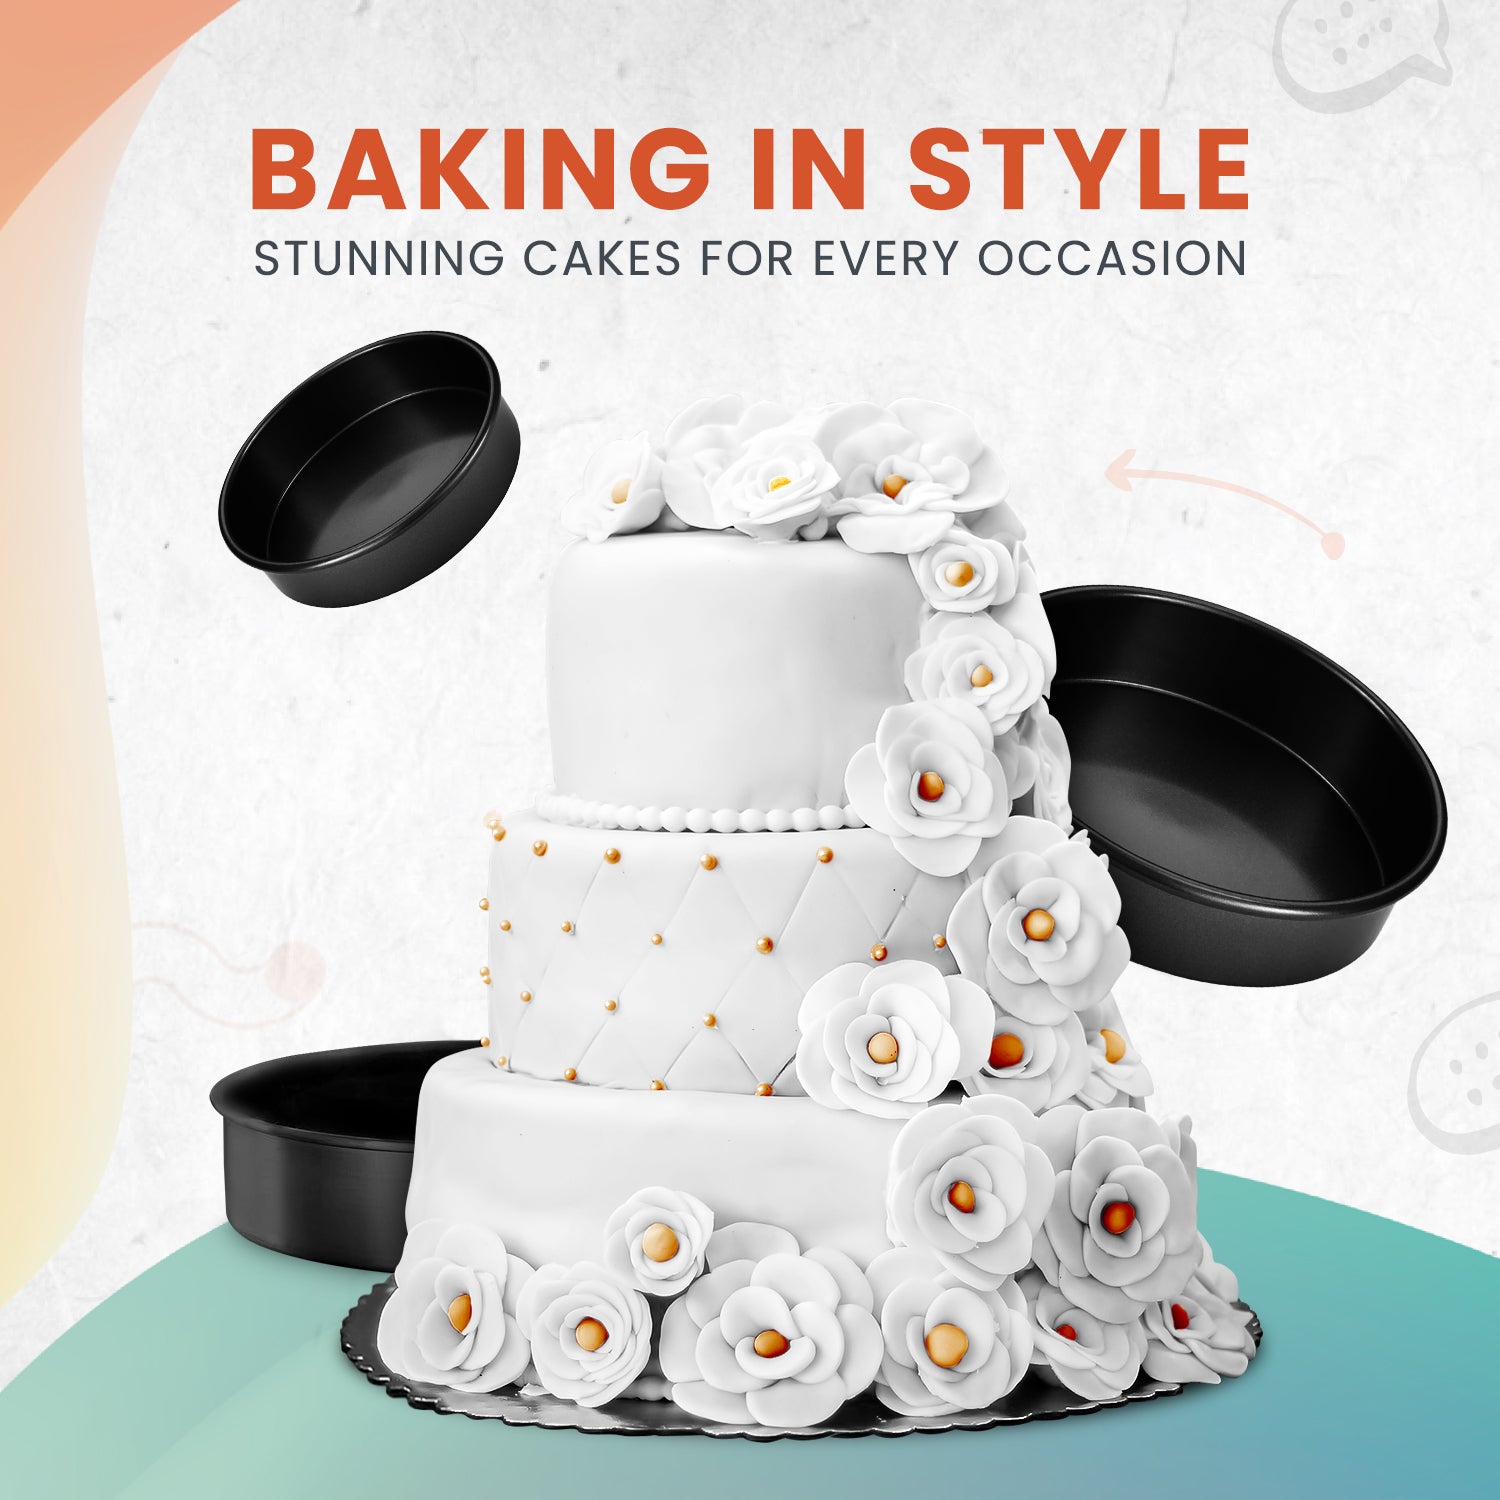 5233128 Professional Non-Stick 3-Piece Round Cake Pan Bakeware Set, Gray